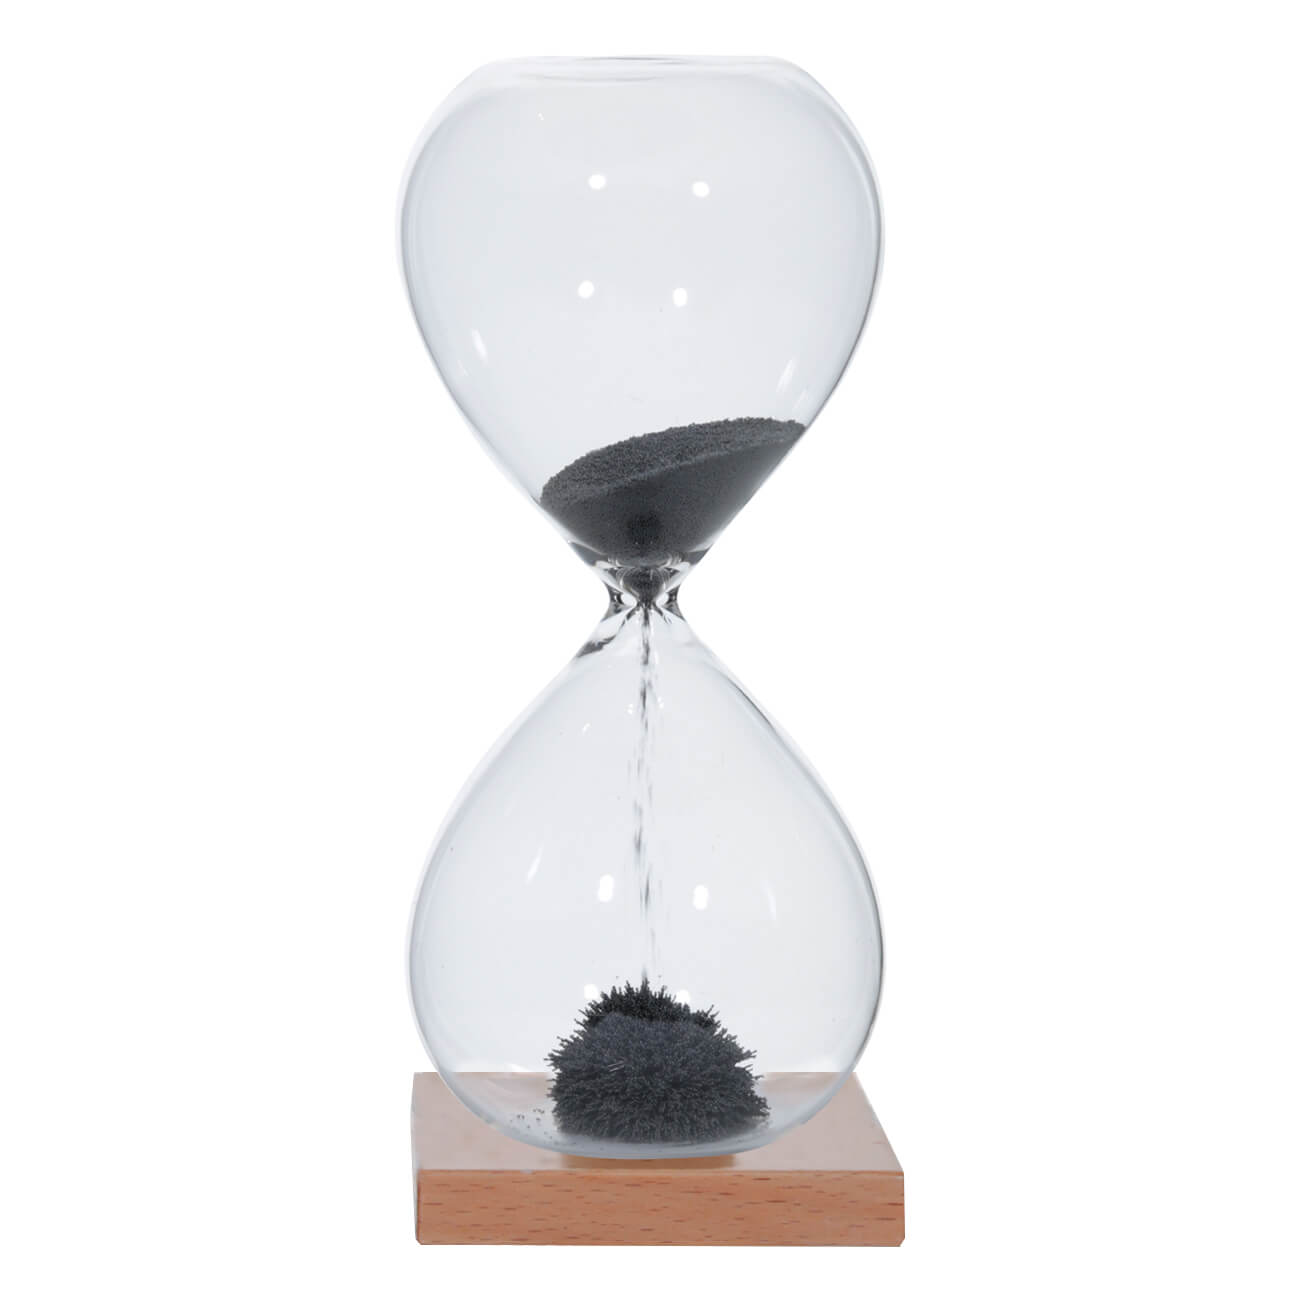 Hourglass, 16 cm, 1 minute, magnetic, stand, glass / wood, grey изображение № 1